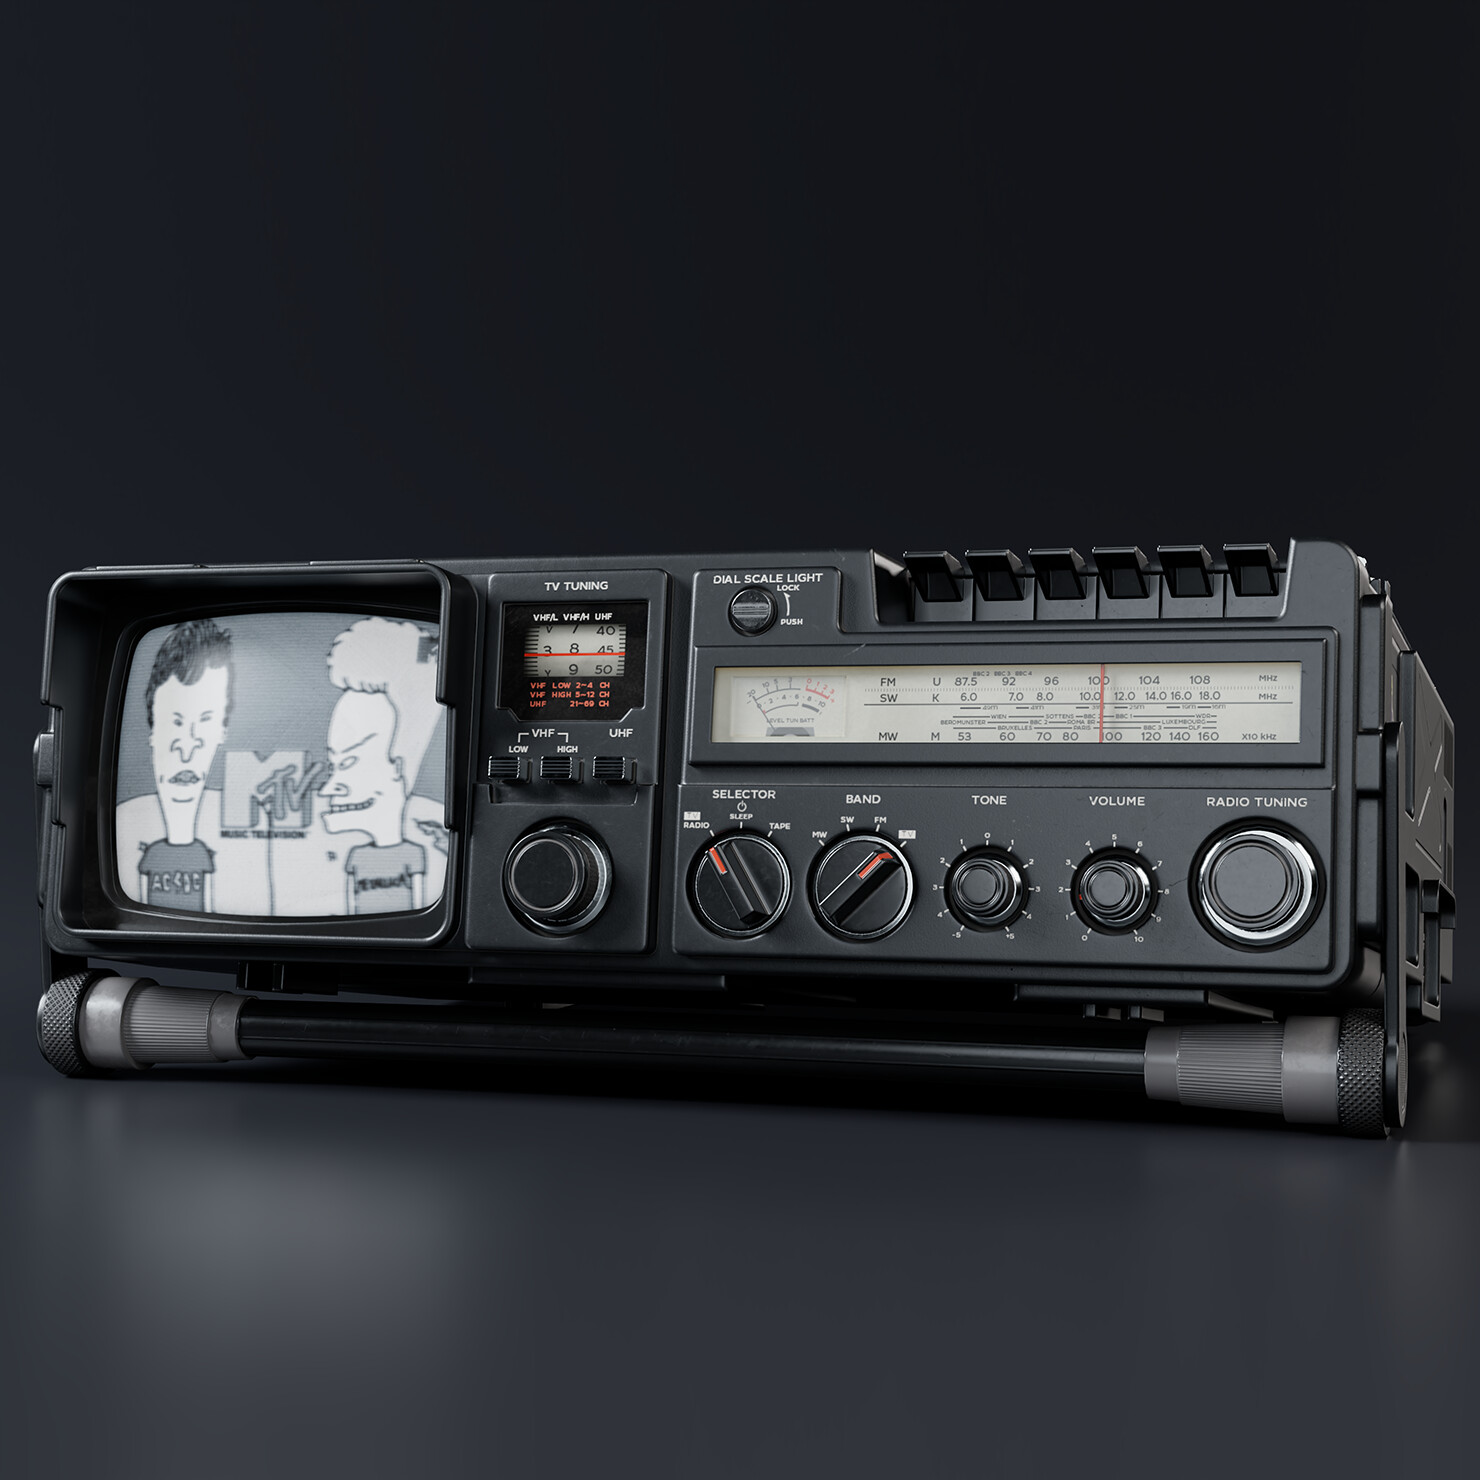 ArtStation - Hitachi Radio Cassette Player TRK-5050 - Personal Project